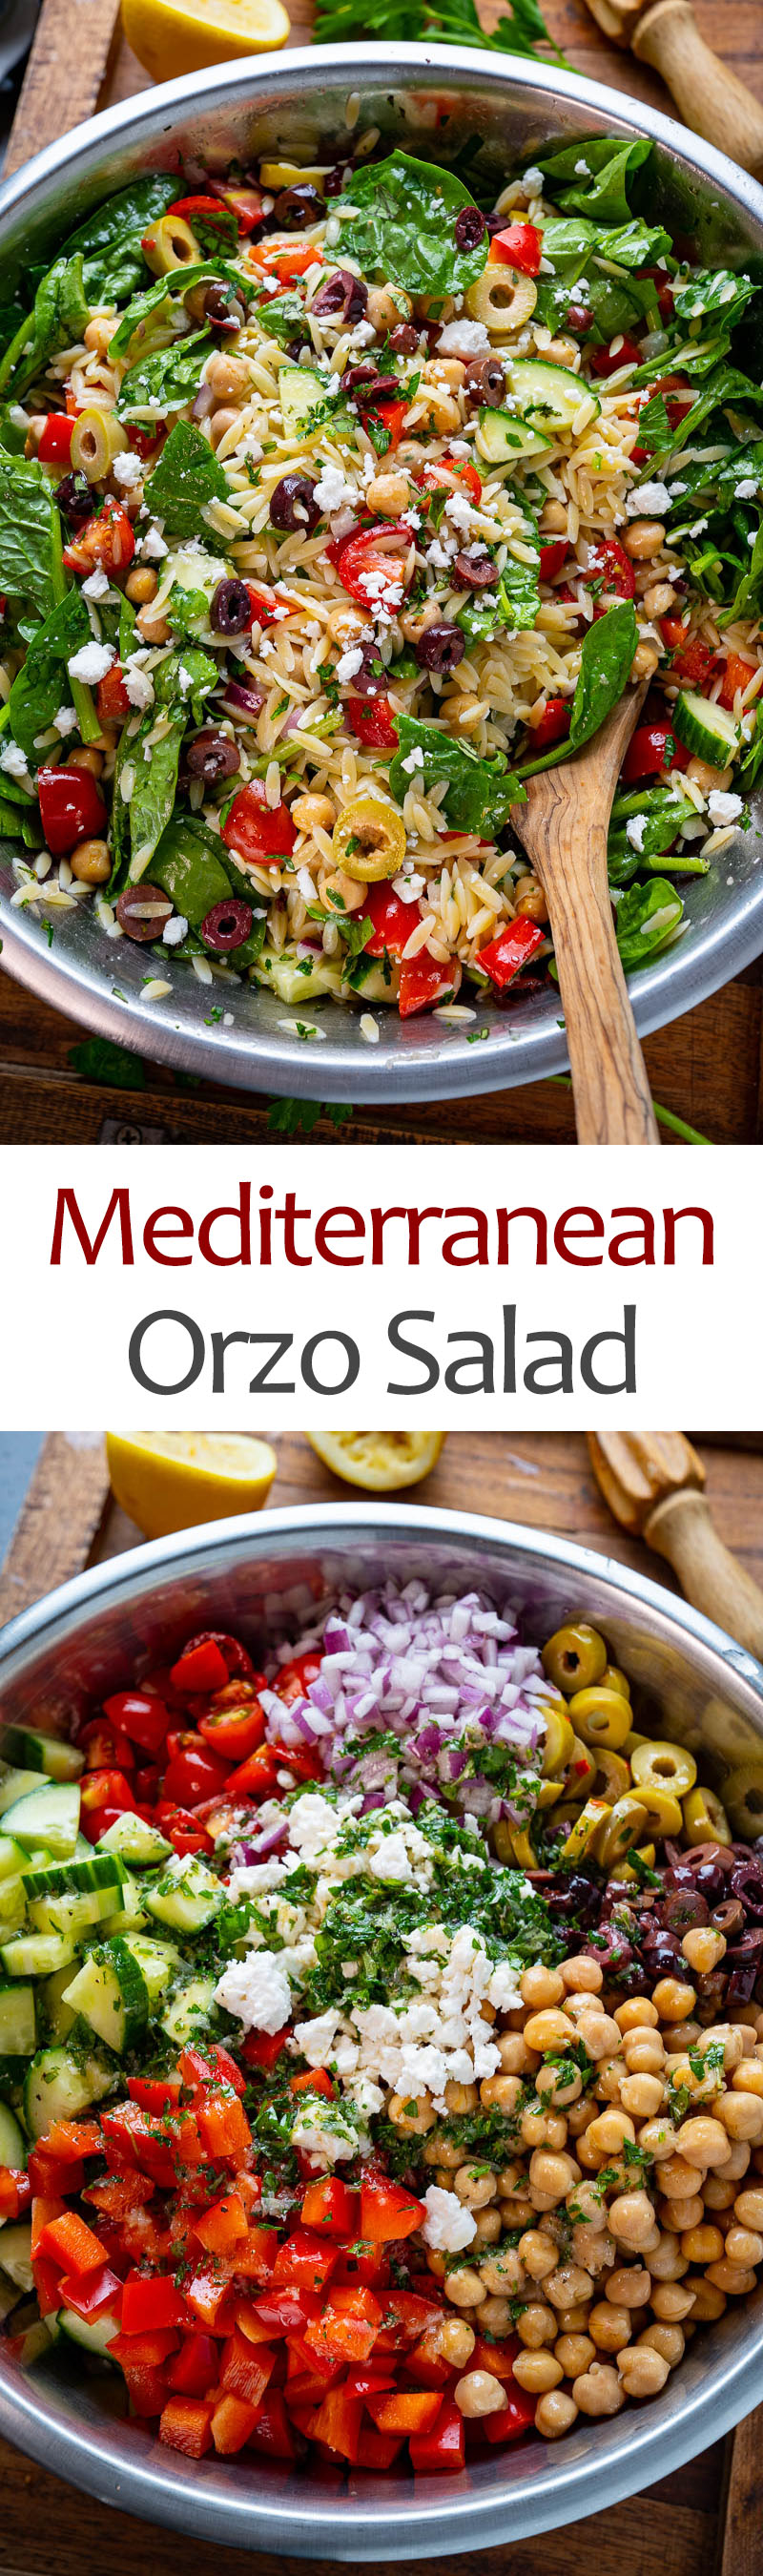 Mediterranean Orzo Pasta Salad